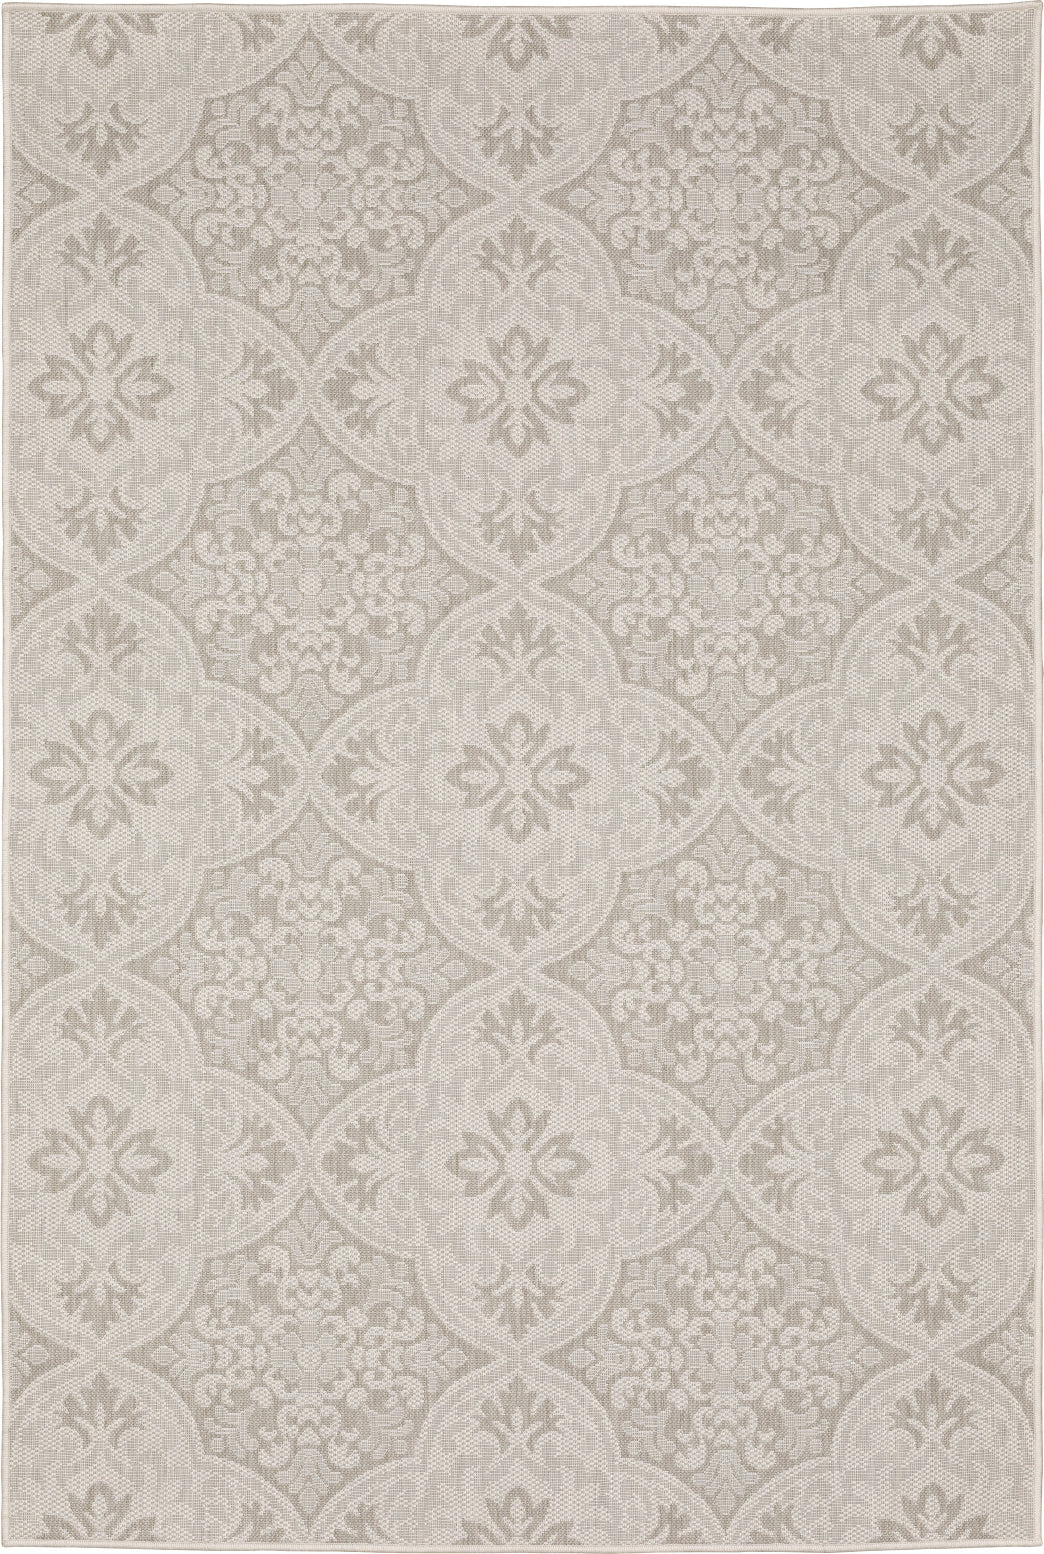 Oriental Weavers Portofino 2805W Ivory/Grey Area Rug main image featured